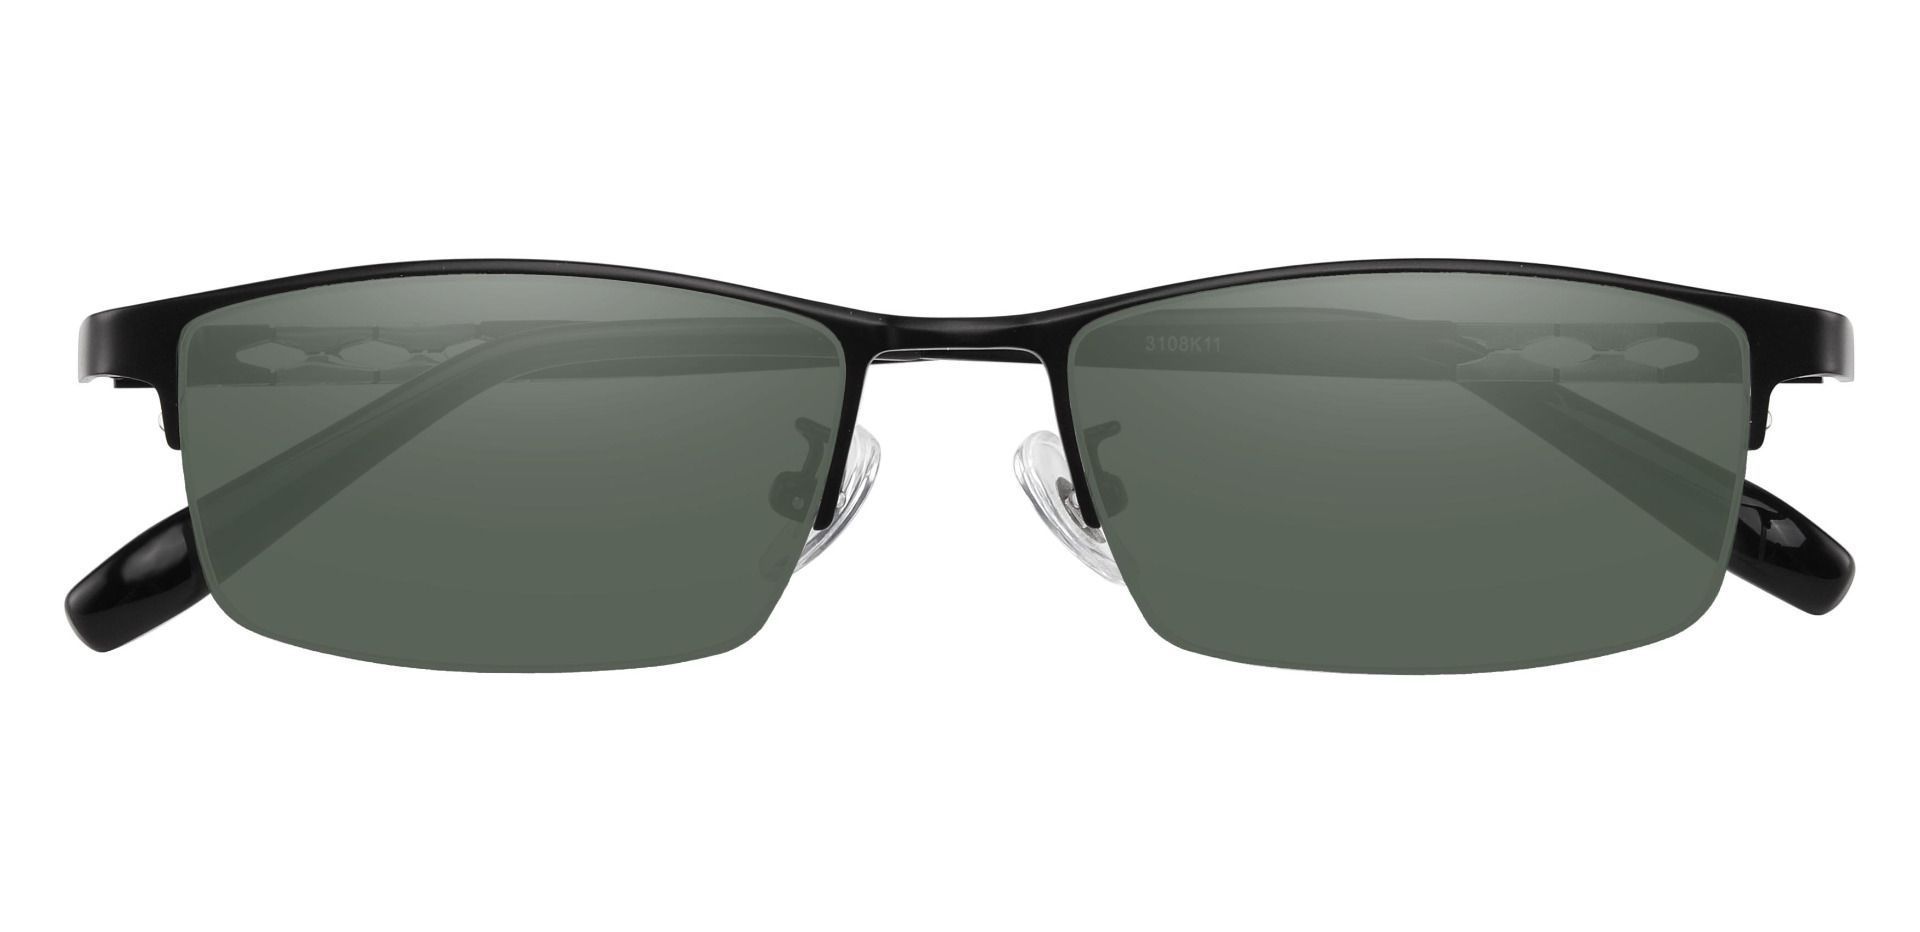 Burlington Rectangle Reading Sunglasses - Black Frame With Green Lenses